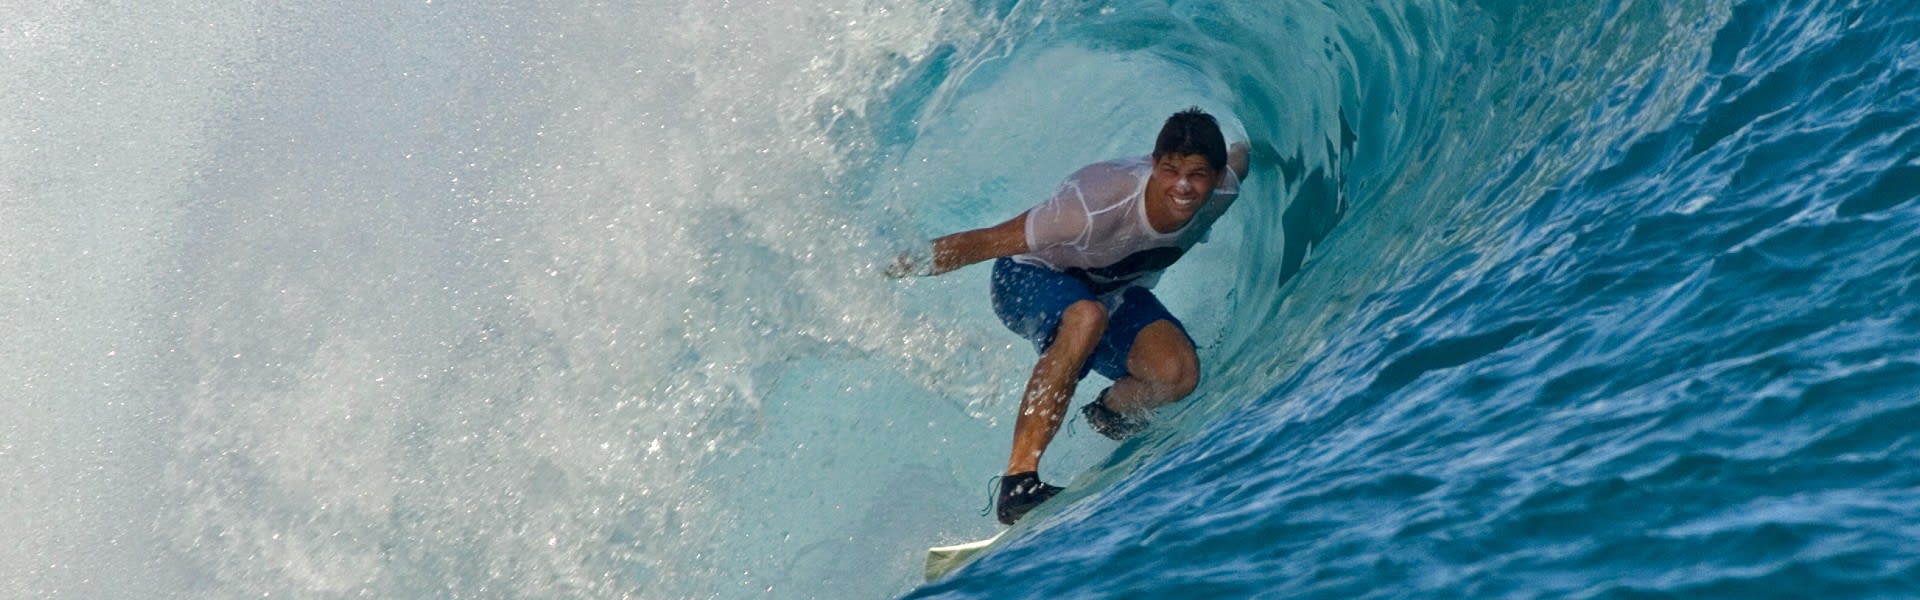 Surfing at Anantara Veli Maldives Resort